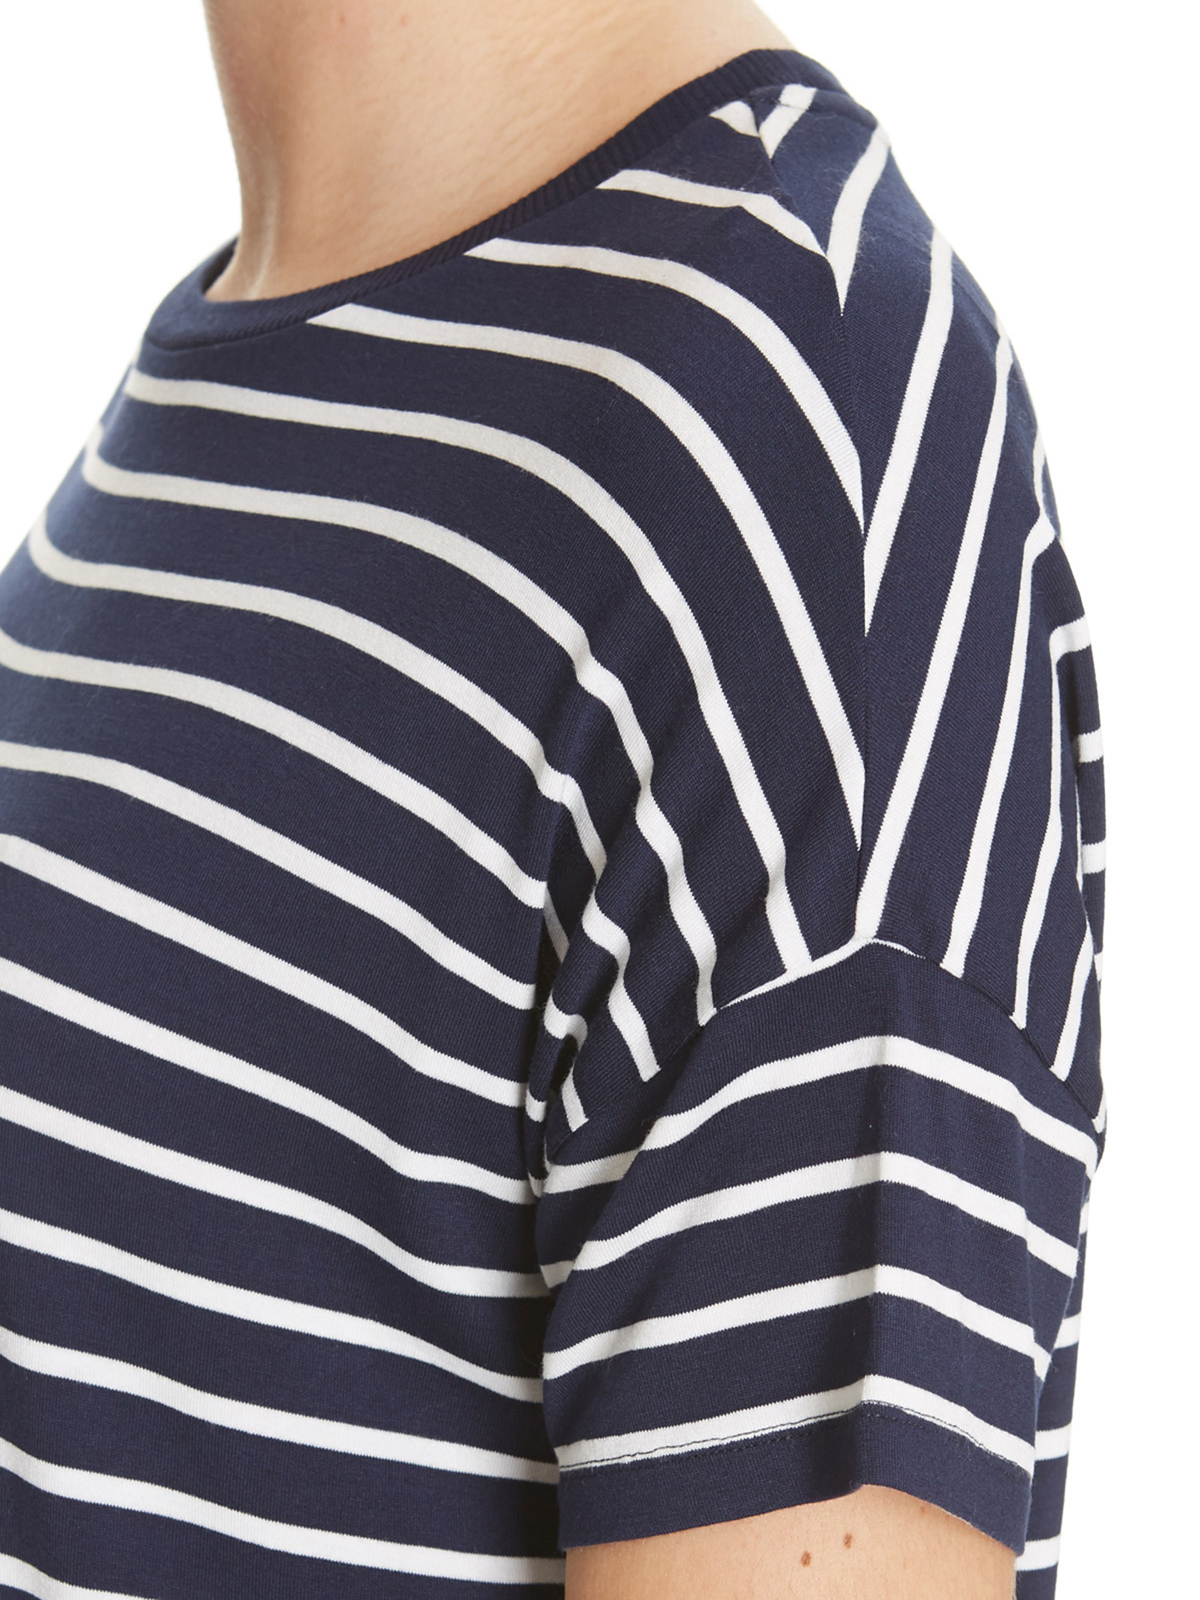 Dunn3s NAVY Short Sleeve Striped Jersey T-Shirt - Size 12 to 20